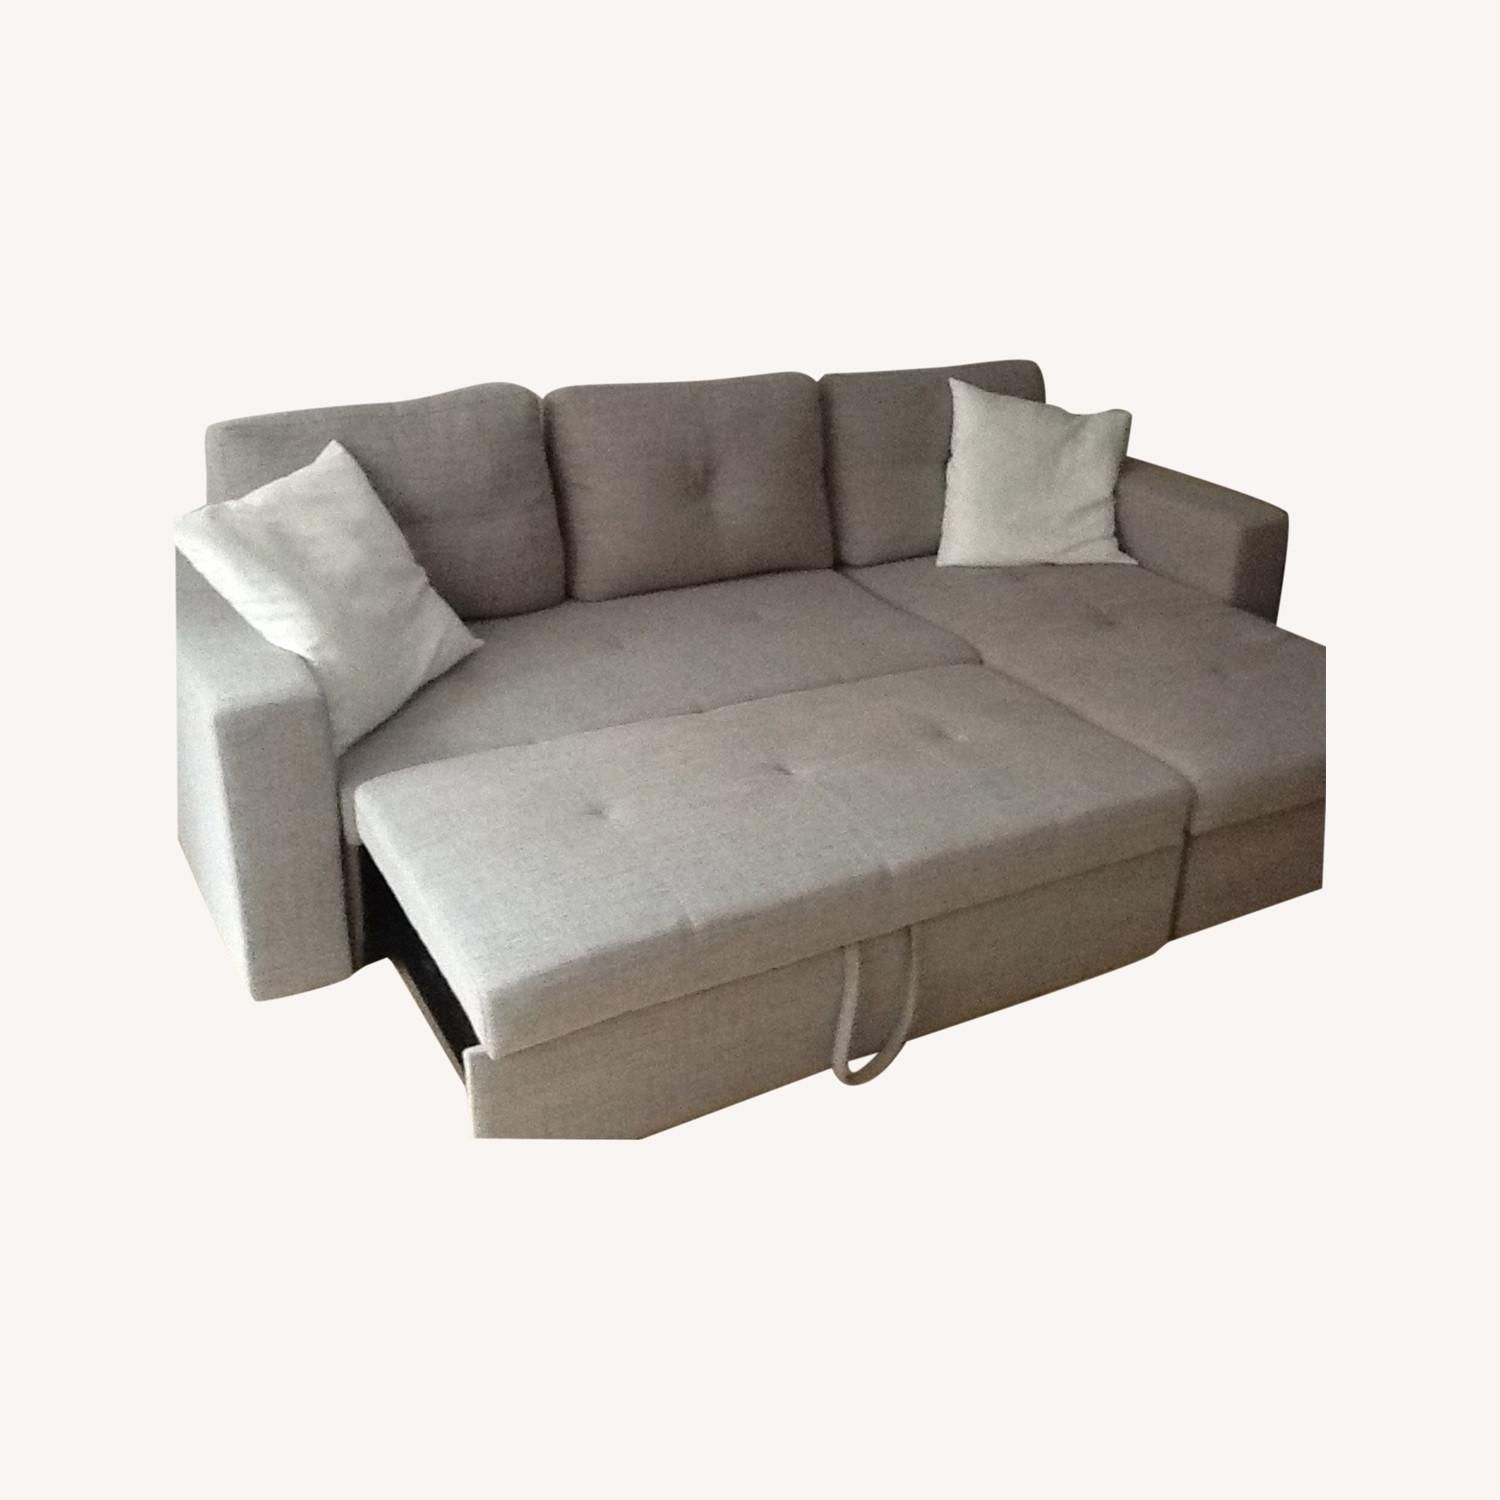 Grey Pull Out Sleeper Sofa – Aptdeco Pertaining To 3 In 1 Gray Pull Out Sleeper Sofas (View 6 of 20)